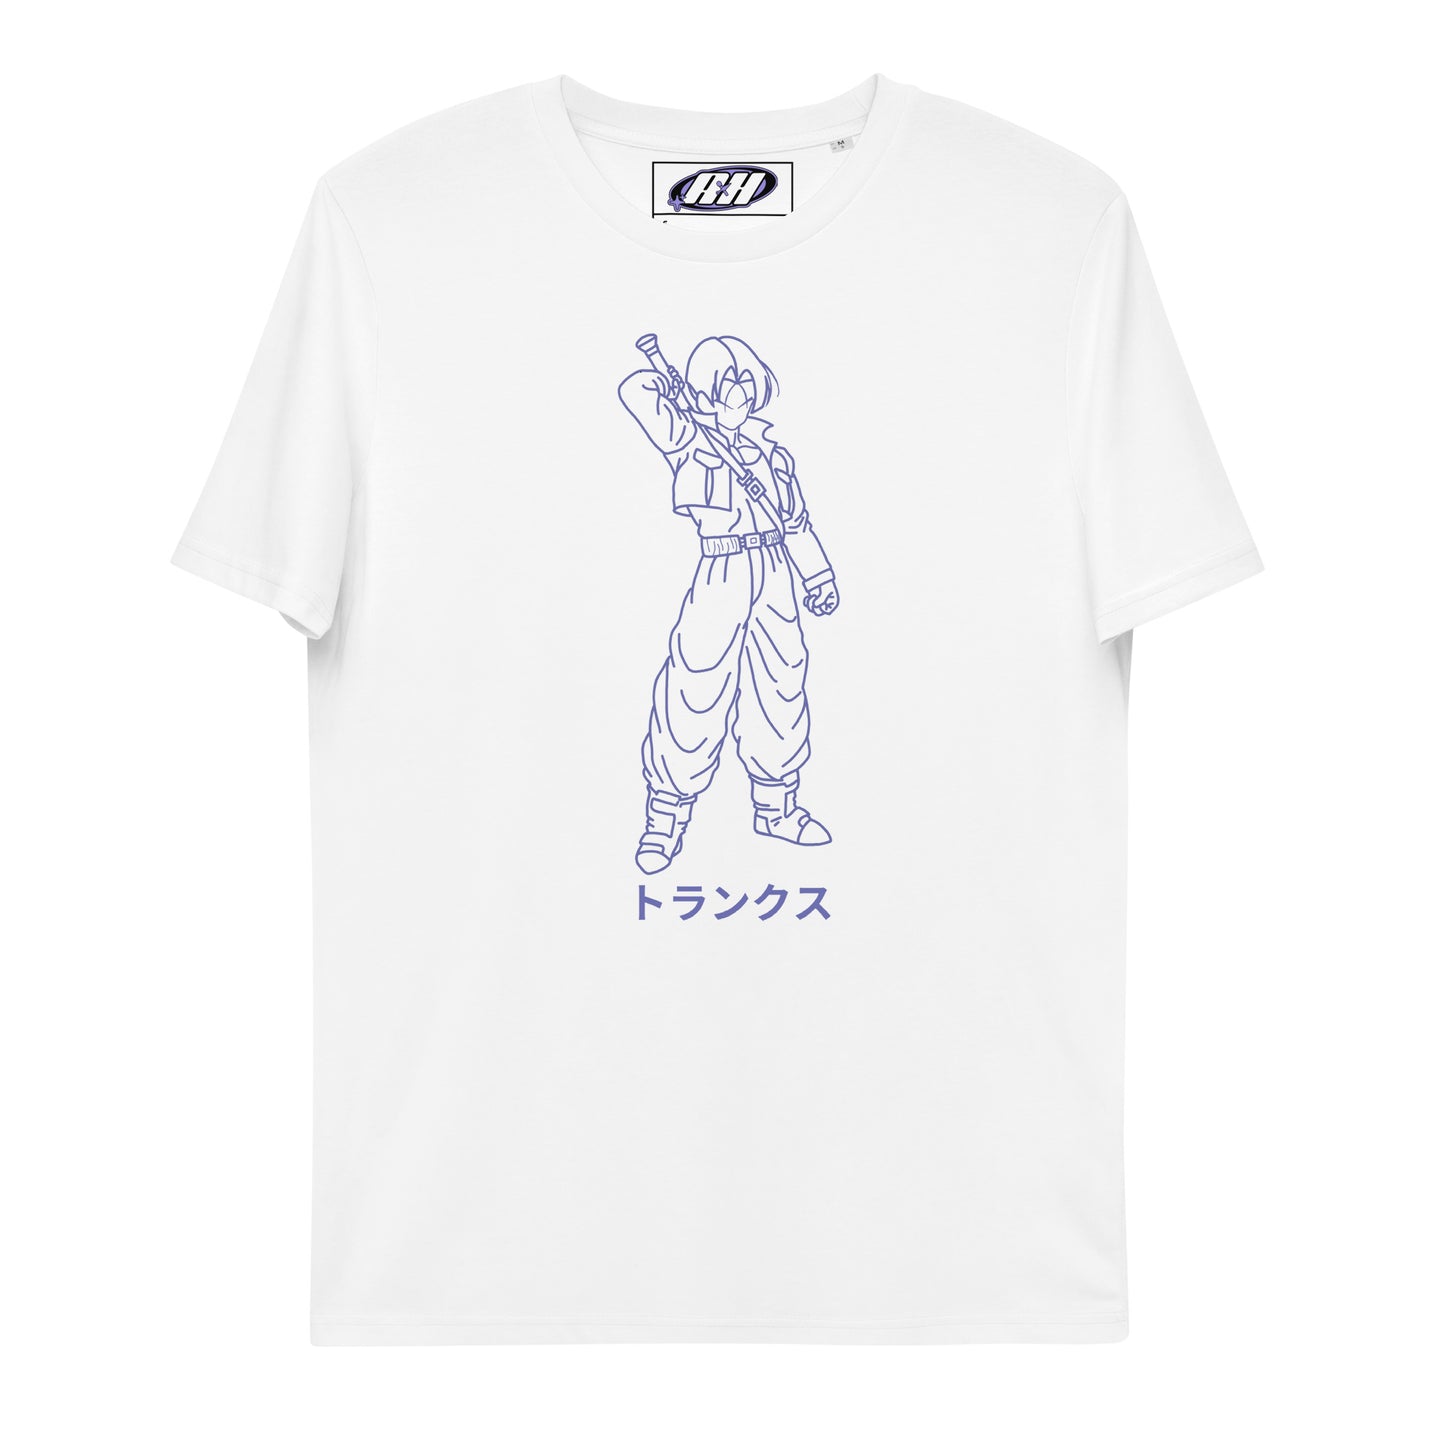 Trunks T-Shirt - anime&hiphop